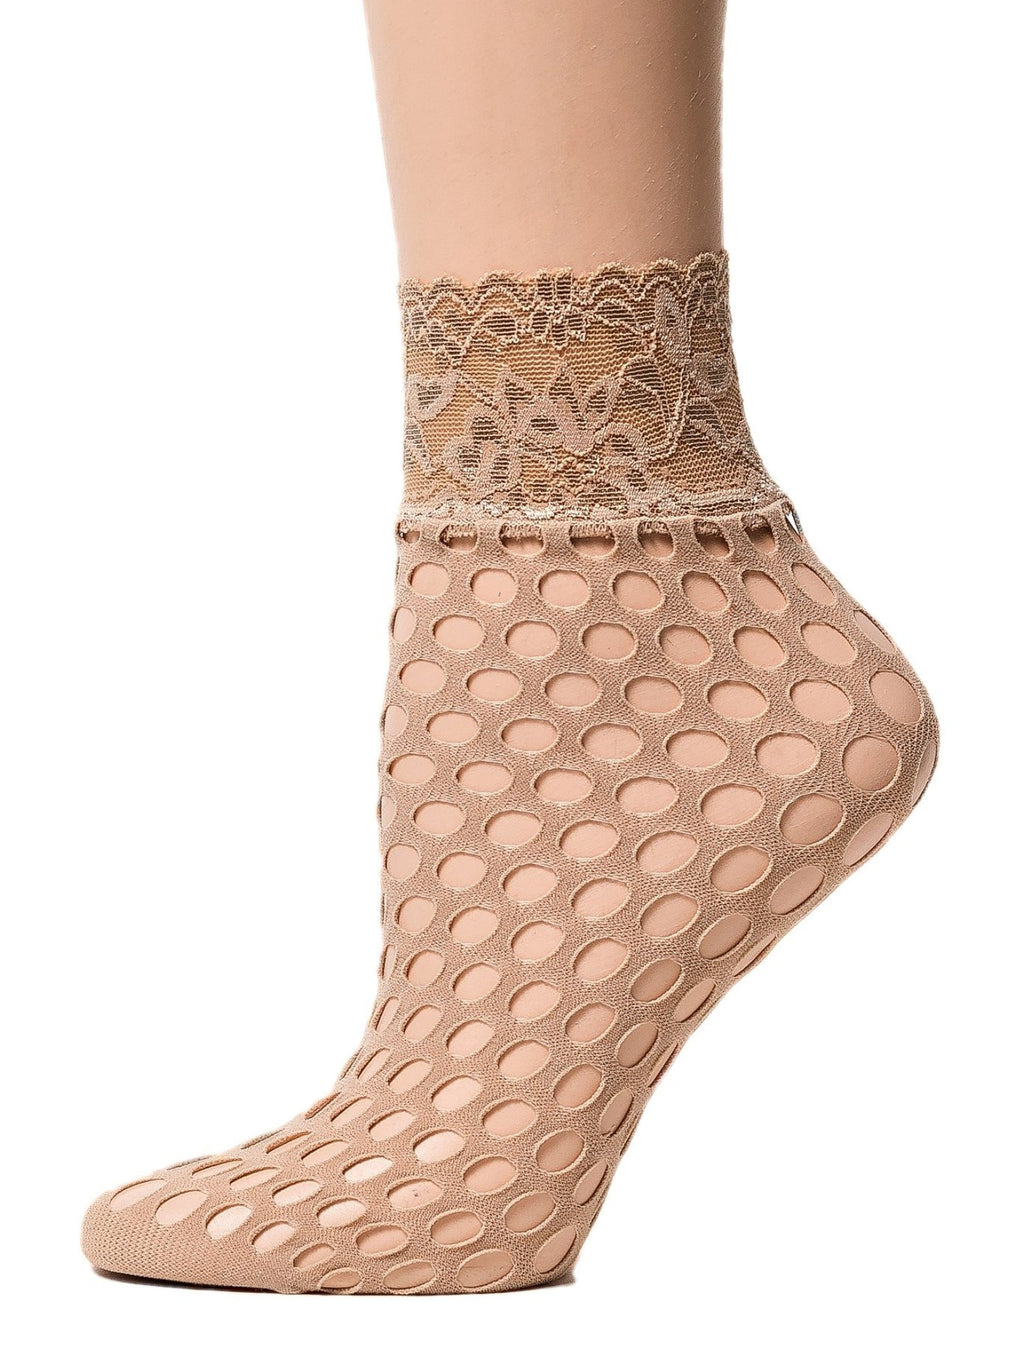 Nick Beige Mesh Socks - Global Trendz Fashion®